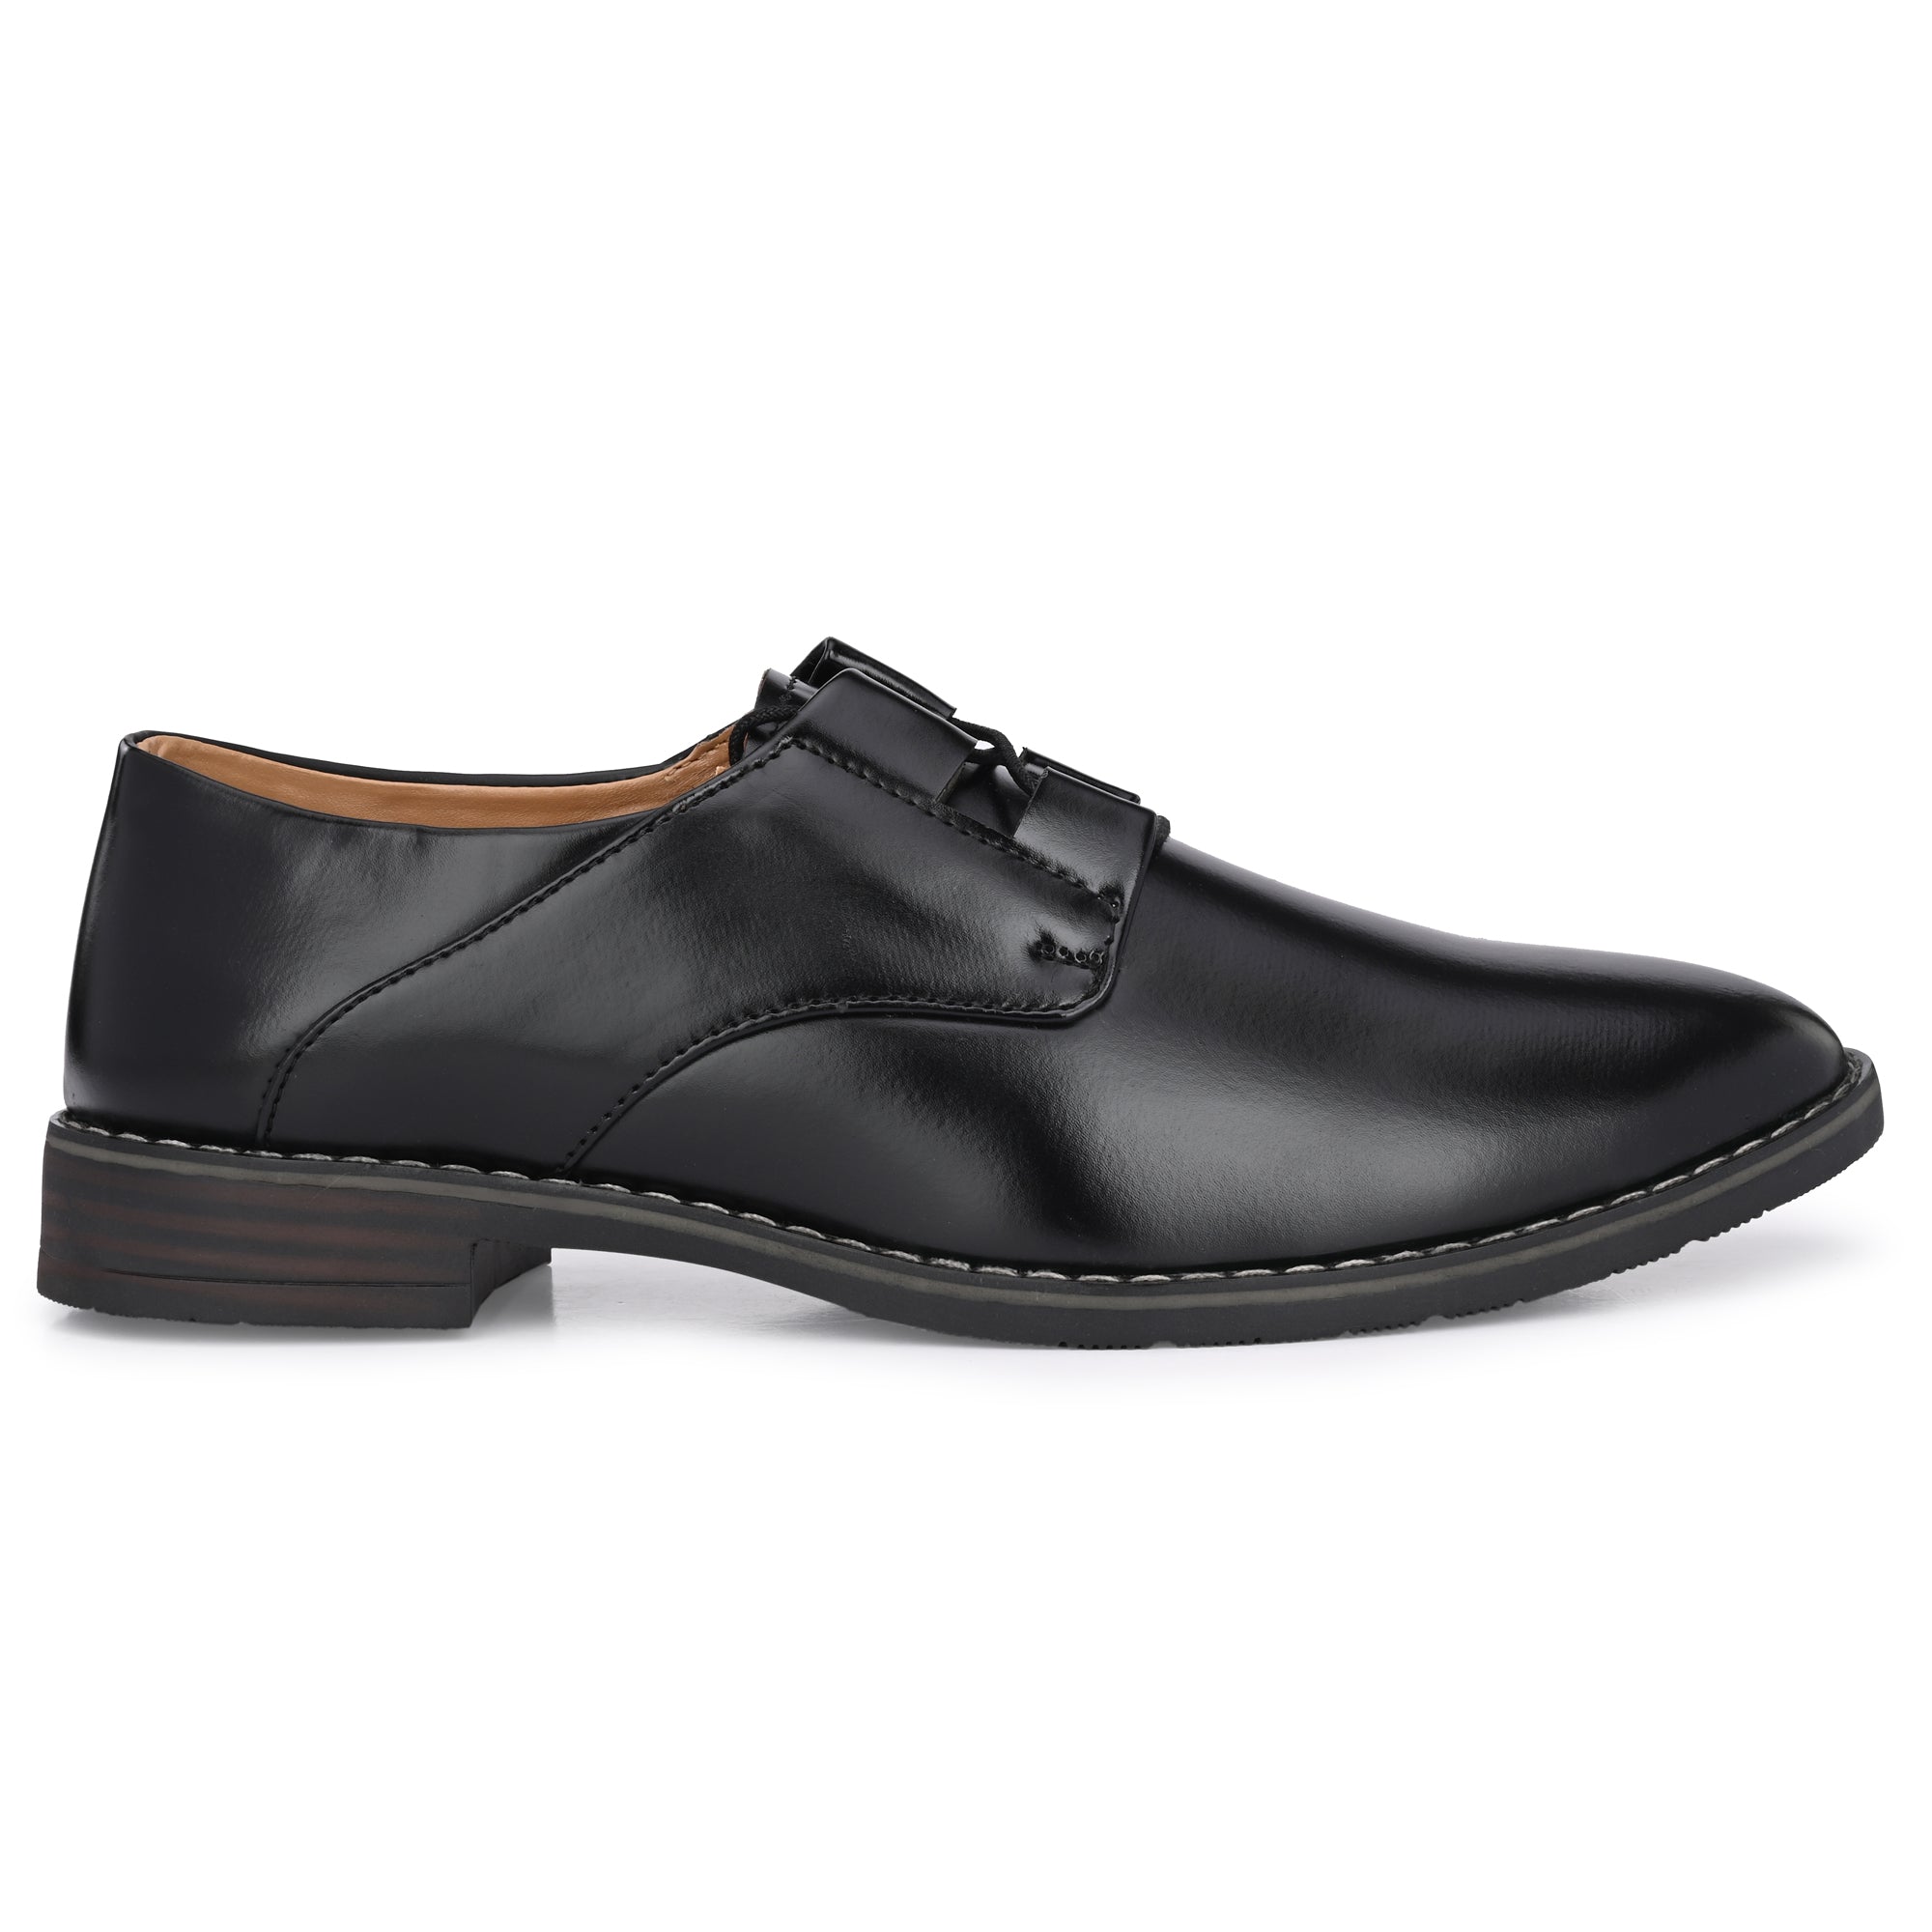 black-formal-lace-up-attitudist-shoes-for-men-with-design-sp12a